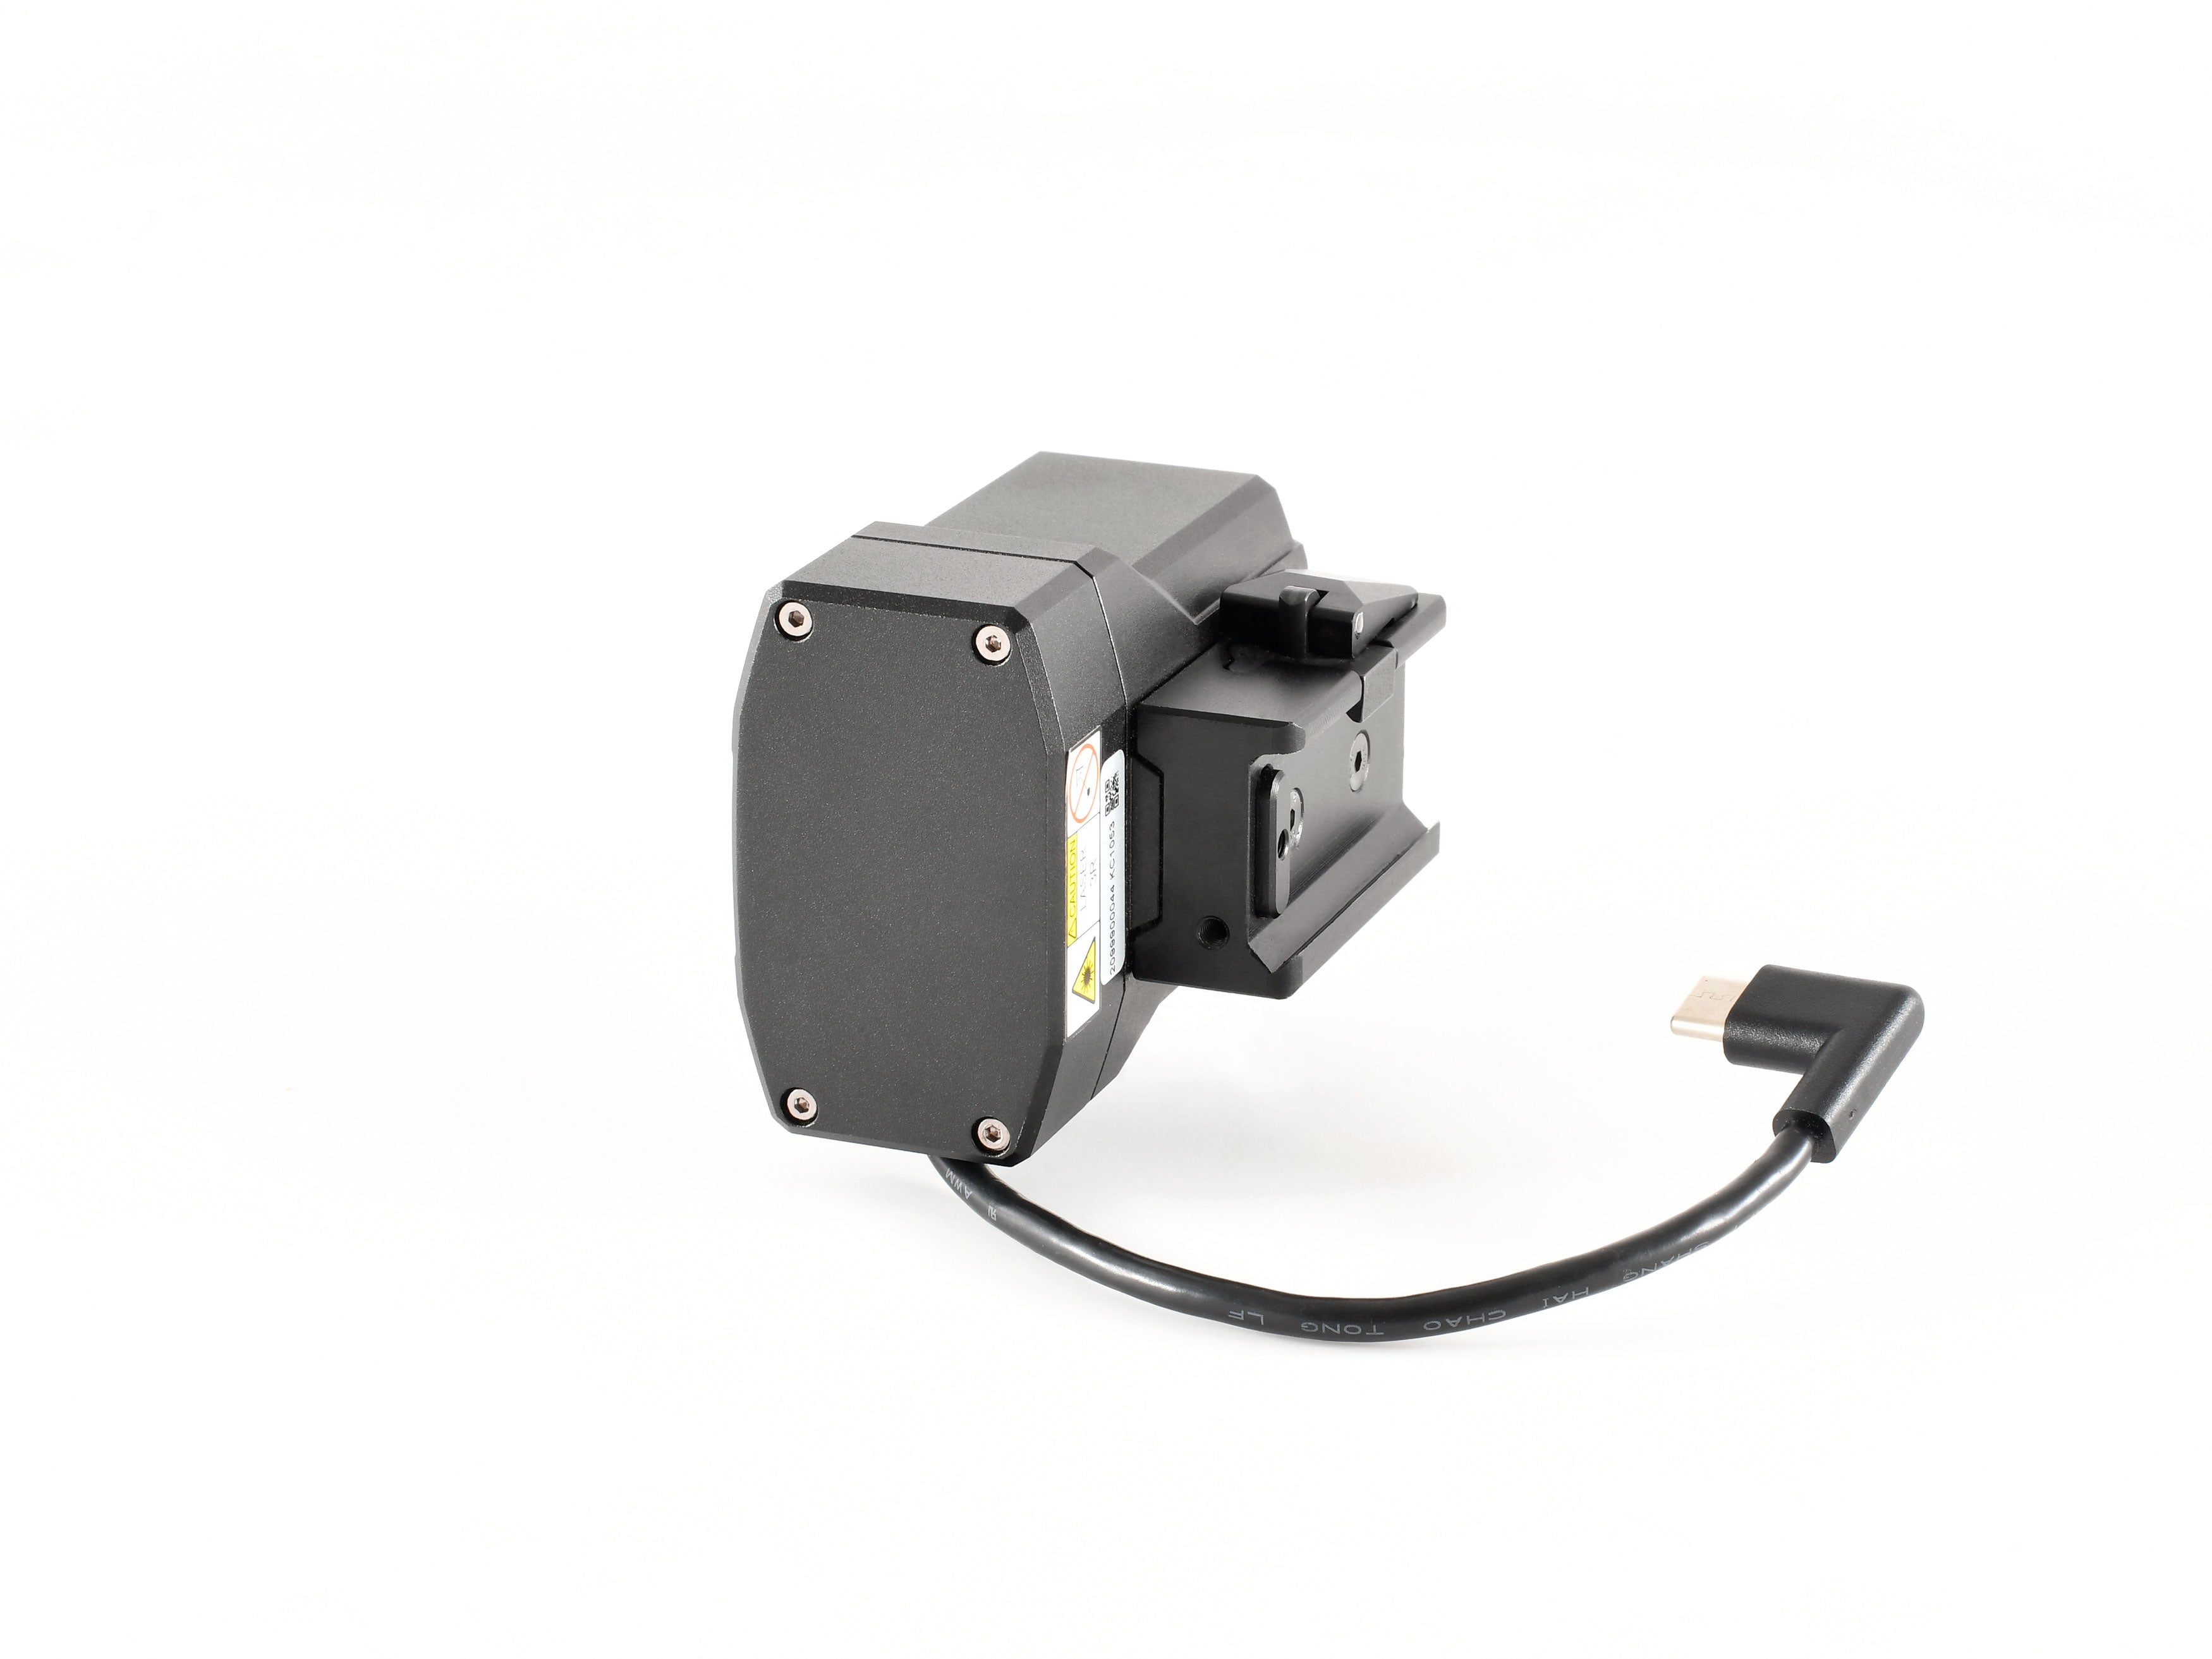 InfiRay Outdoor ILR-1000 Infrared Laser Rangefinder Module for MK1 Models